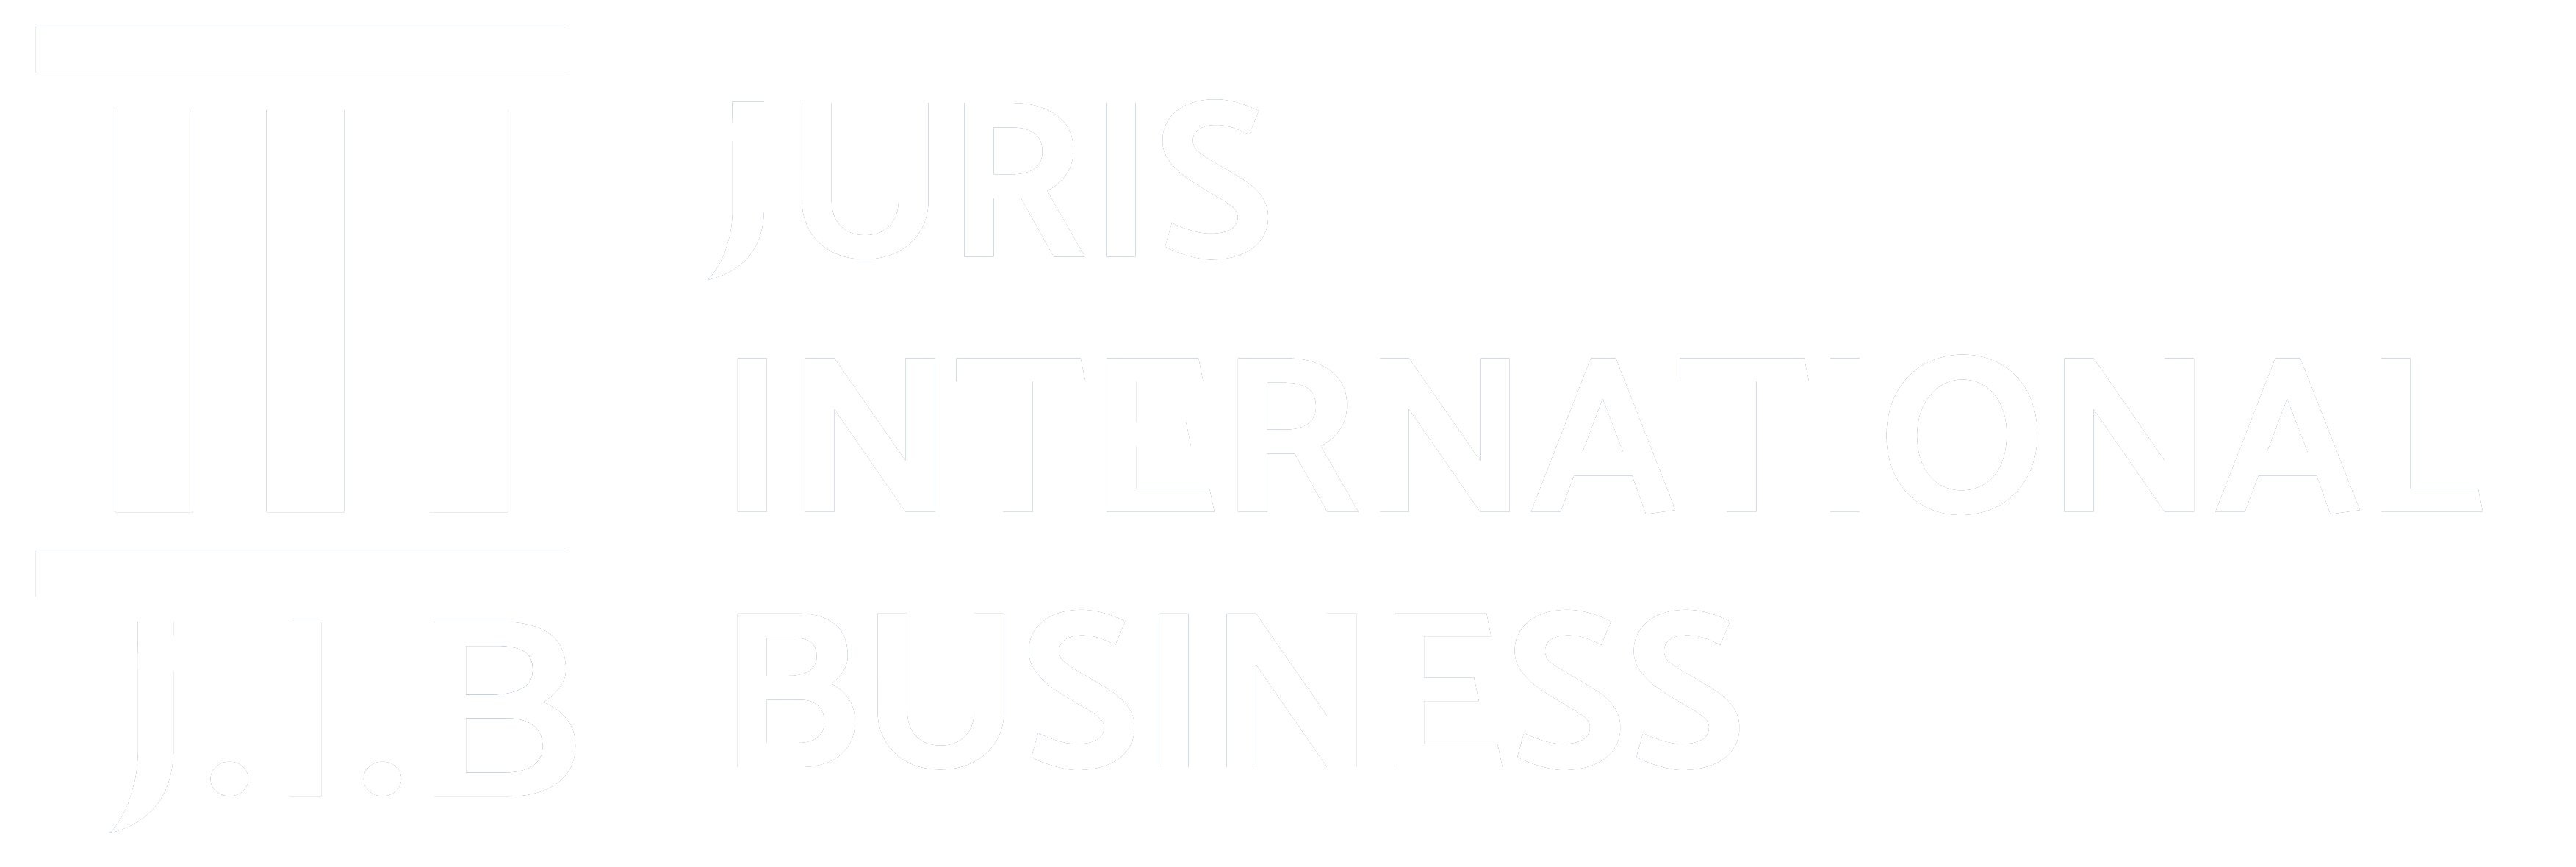 Juris International Business